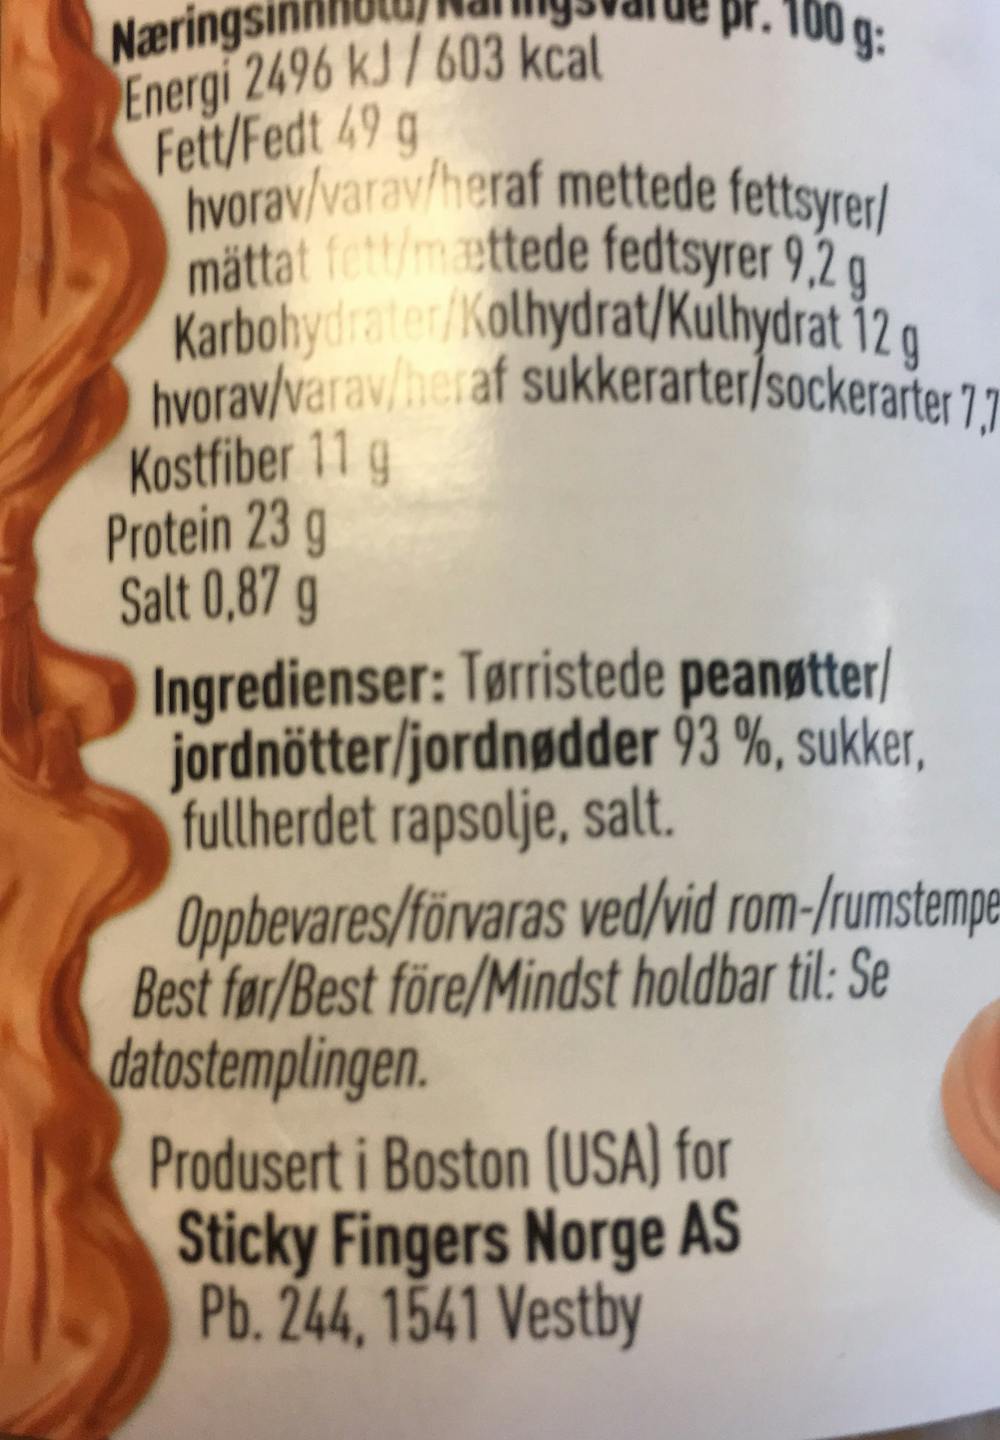 Ingredienslisten til Creamy peanut butter, Sticky fingers